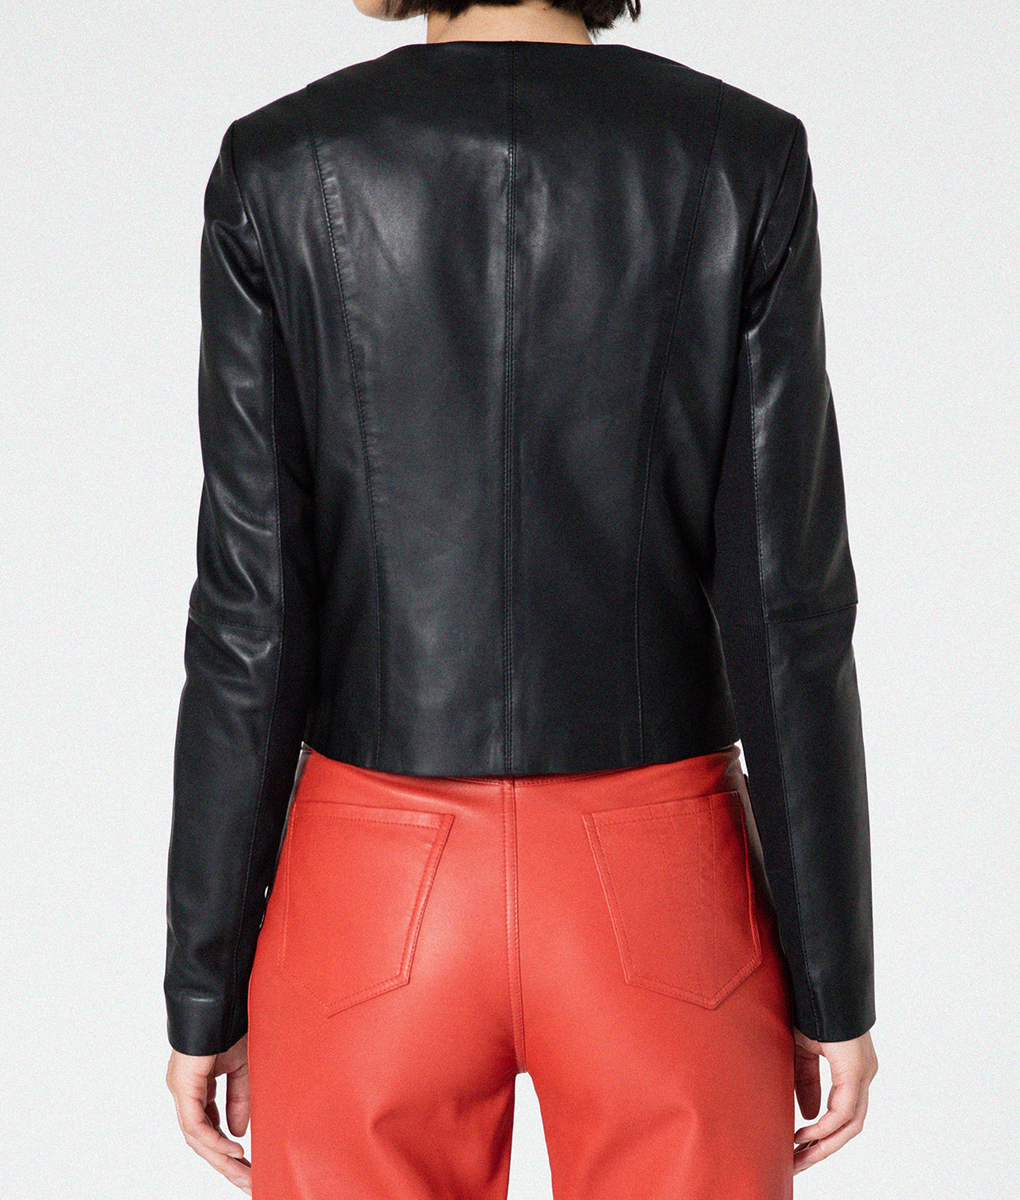 Pamela Adlon Better Things Black Leather Jacket (1)